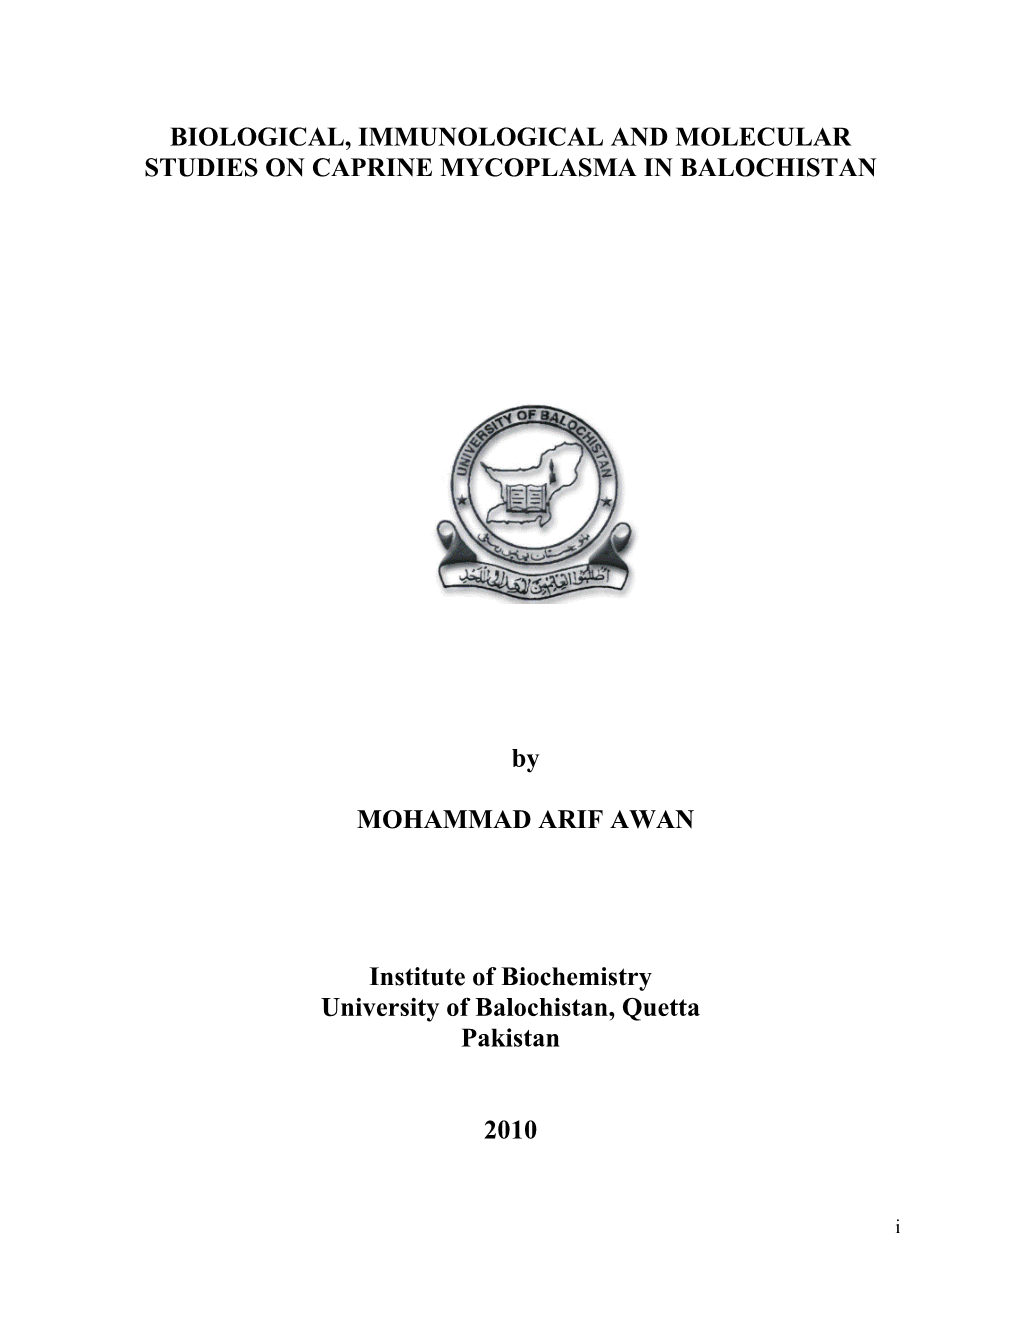 Biological, Immunological and Molecular Studies on Caprine Mycoplasma in Balochistan